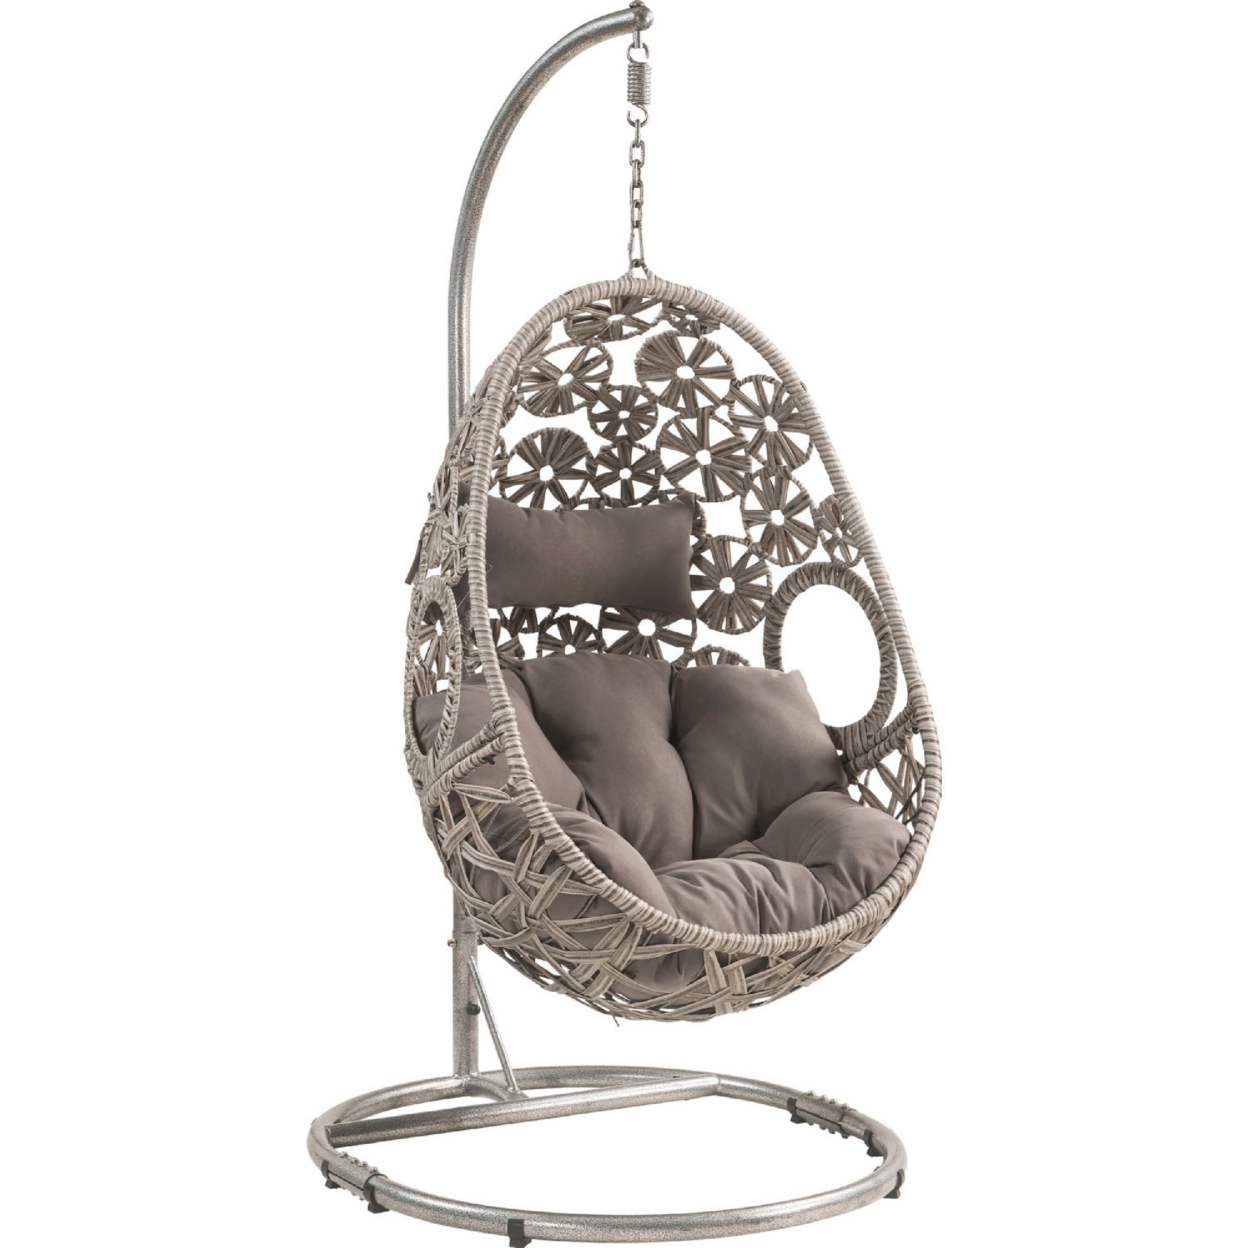 Patio Hanging Chair With Open Circular Motifs And Wicker Frame, Gray- Saltoro Sherpi